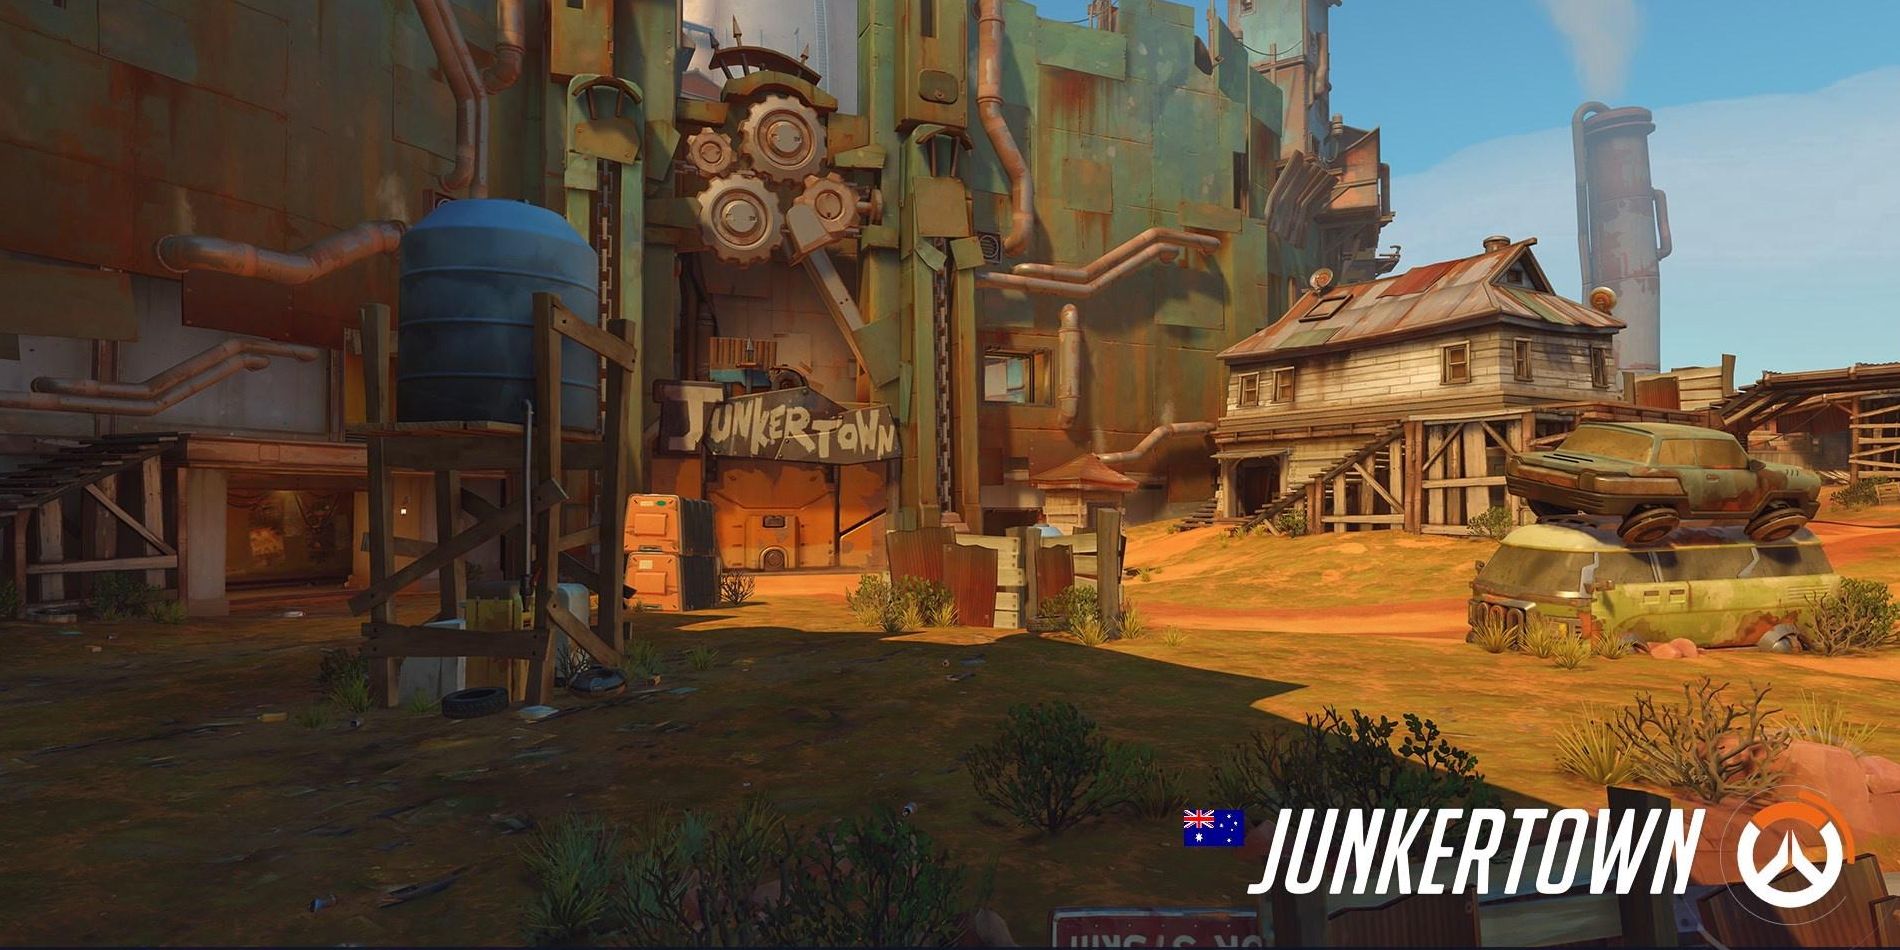 Junkertown's loading screen in Overwatch 2.